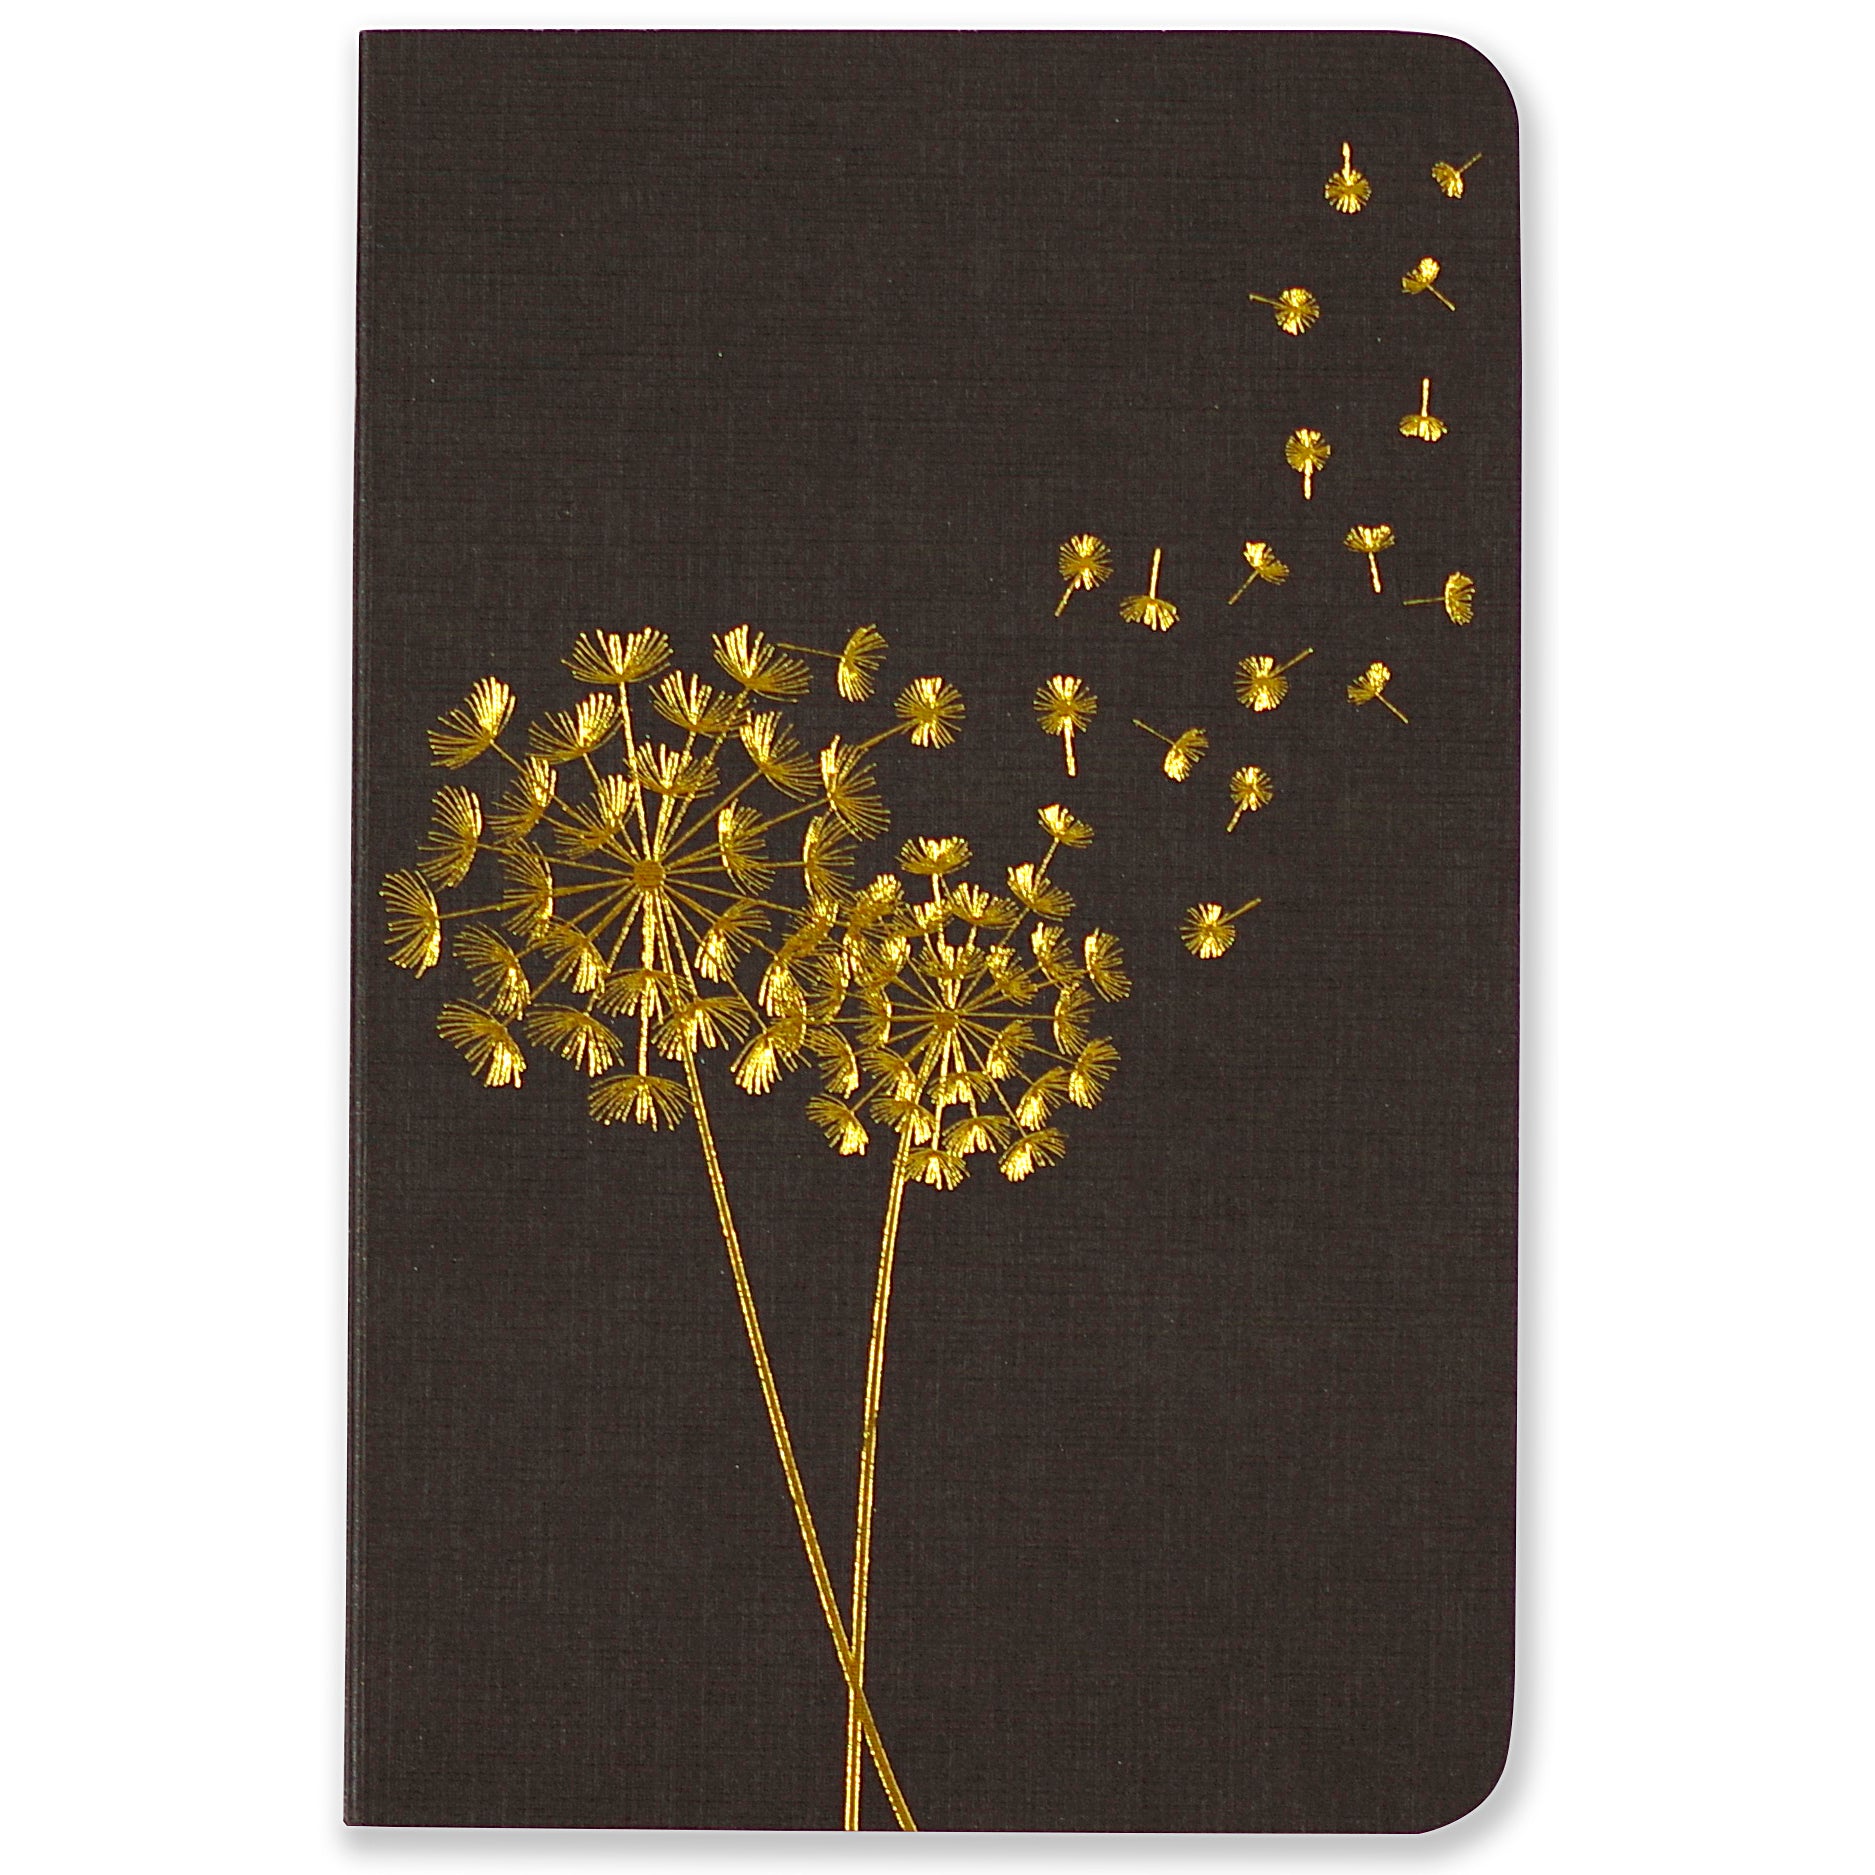 Mini dotted A6 Notebooks - Dandelion - Set of 3 - Paper Kooka